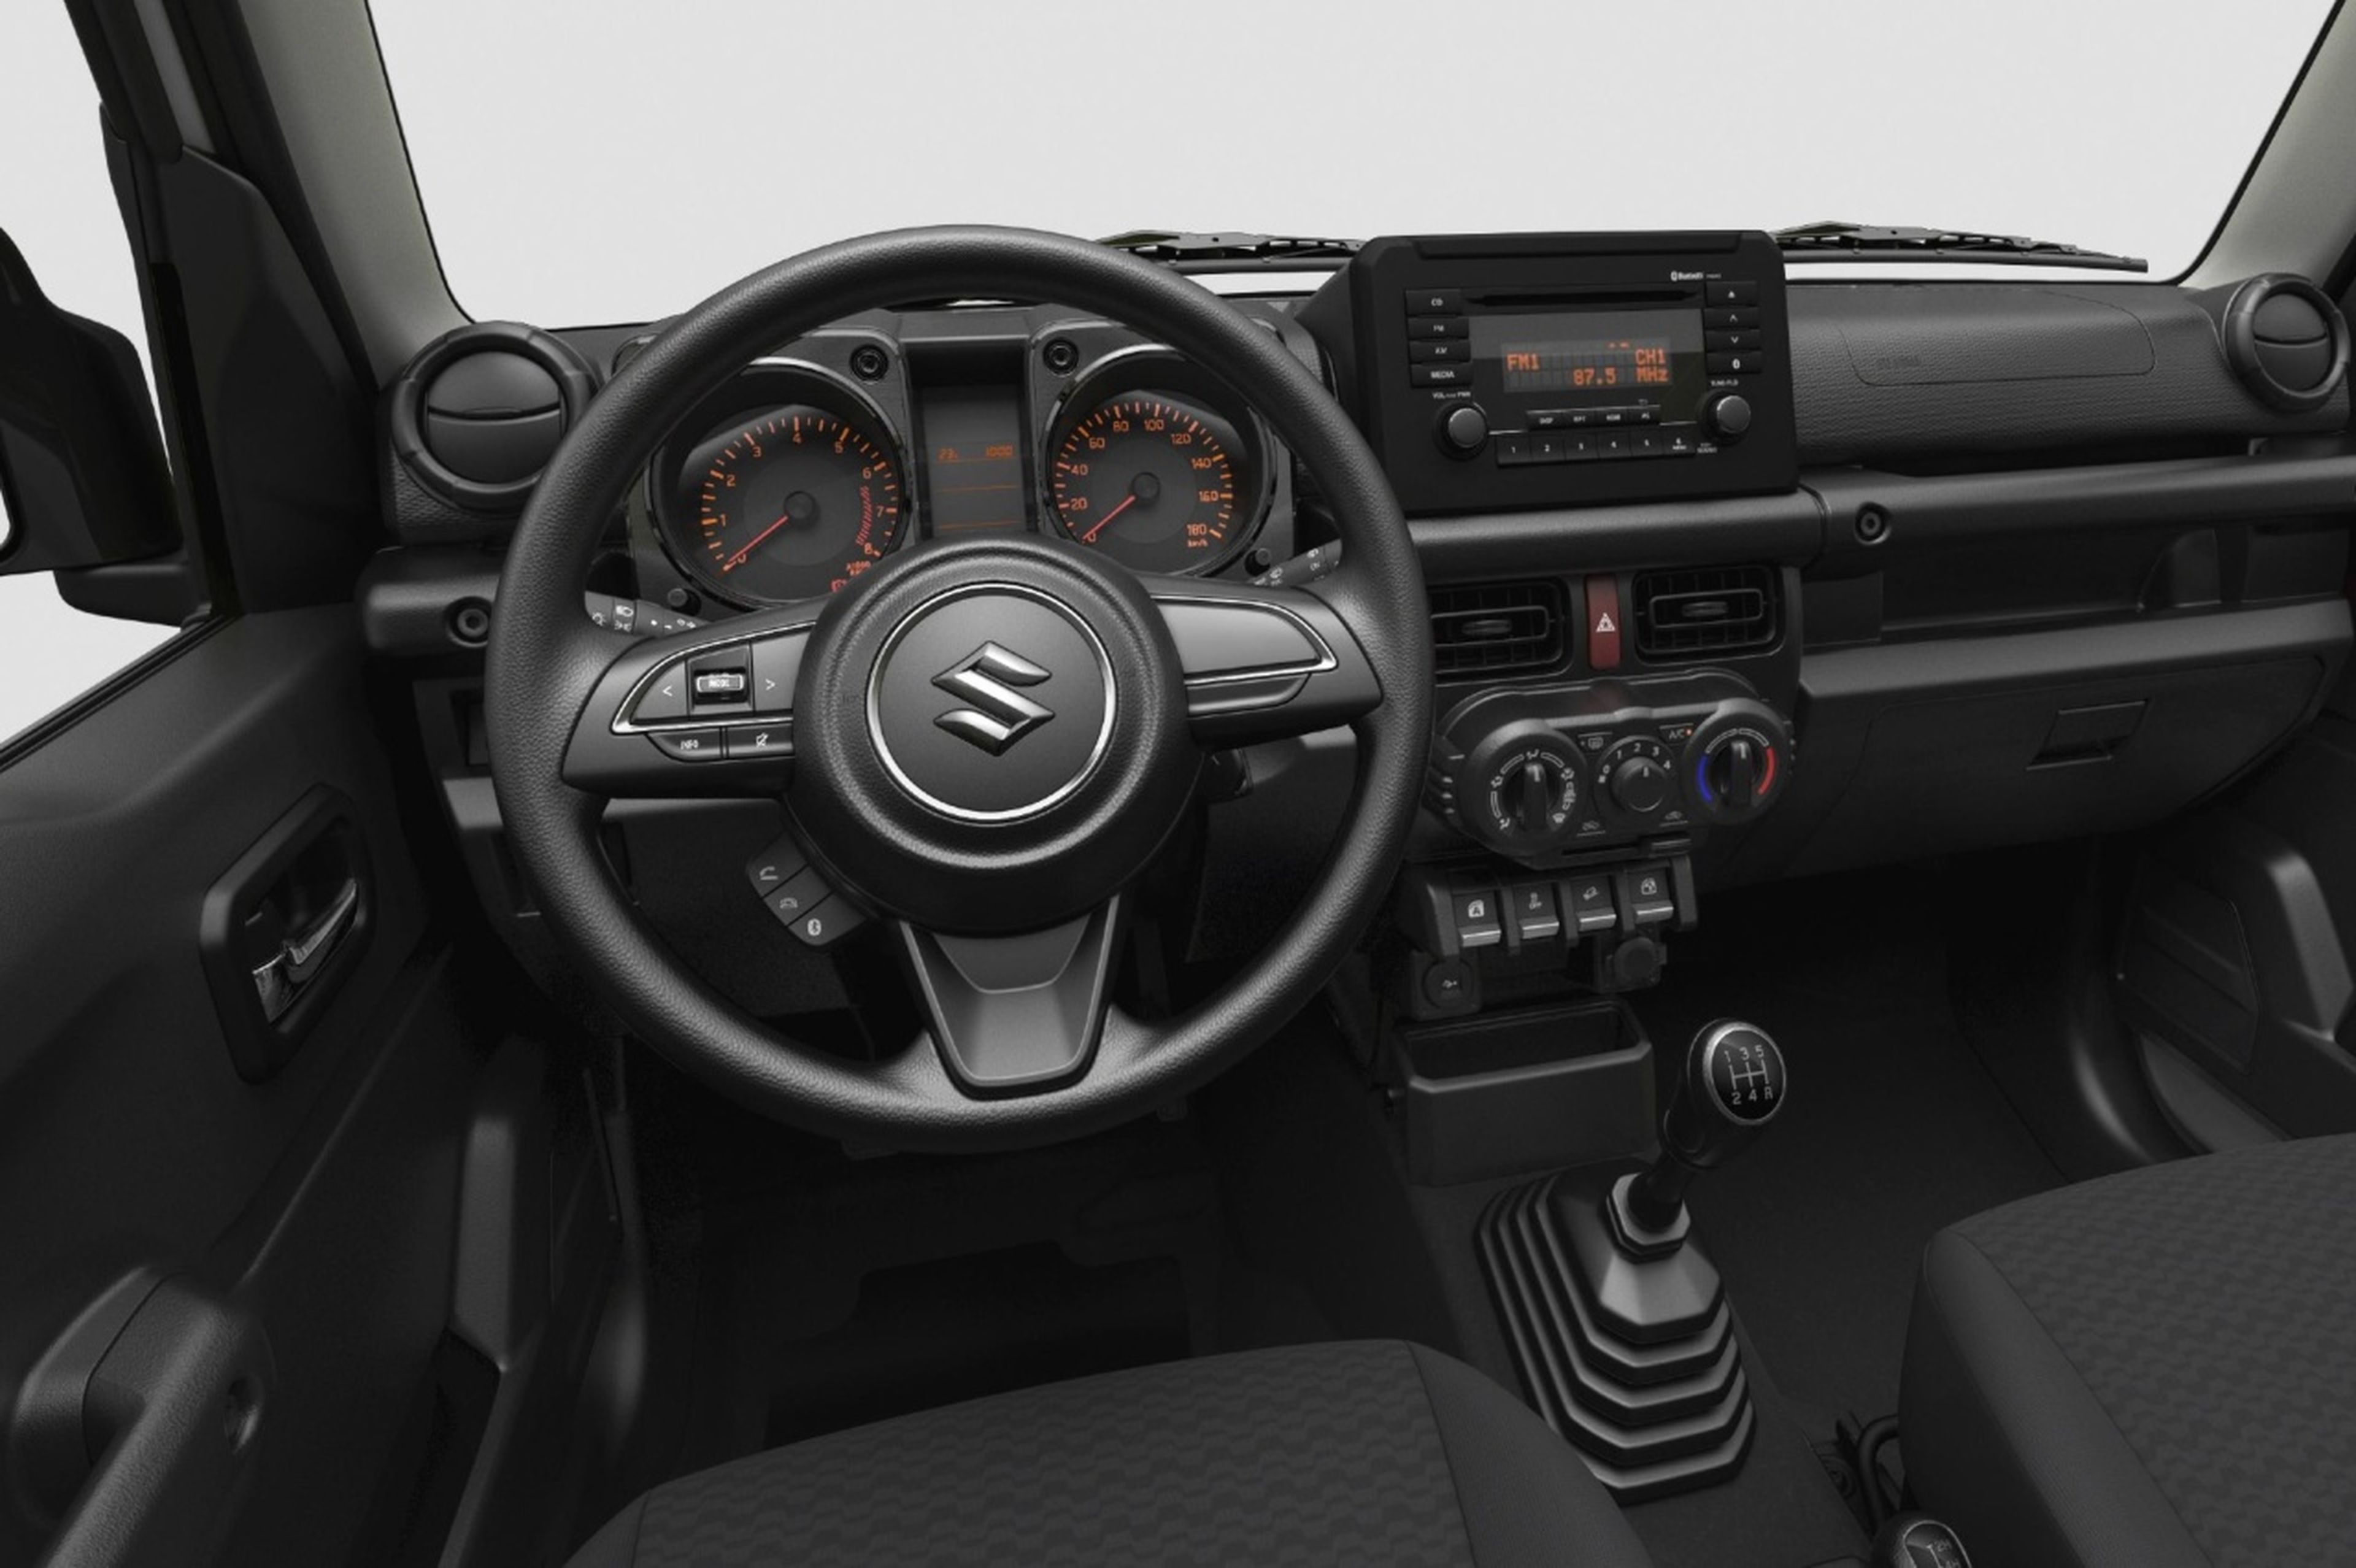 Suzuki Jimny Lite interior